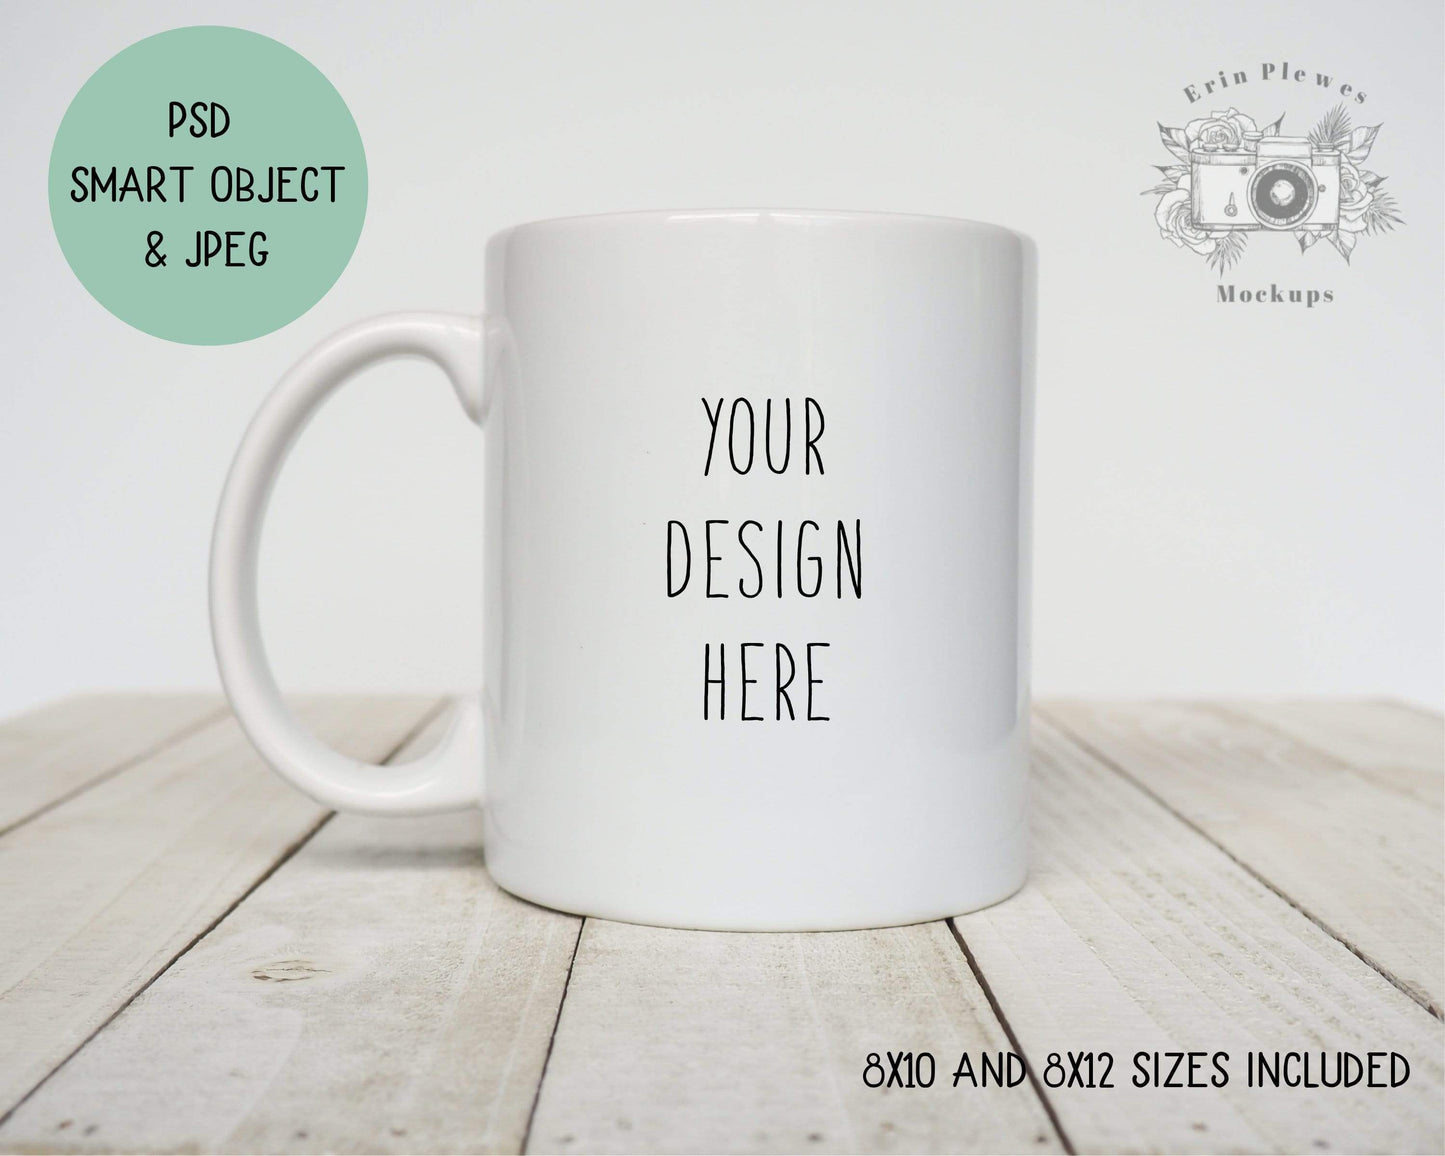 Erin Plewes Mockups Mug Mockup Smart Object, Coffee Mug Mock-up for Minimal Styled Stock Photo, Digital Download Jpeg and PSD Template